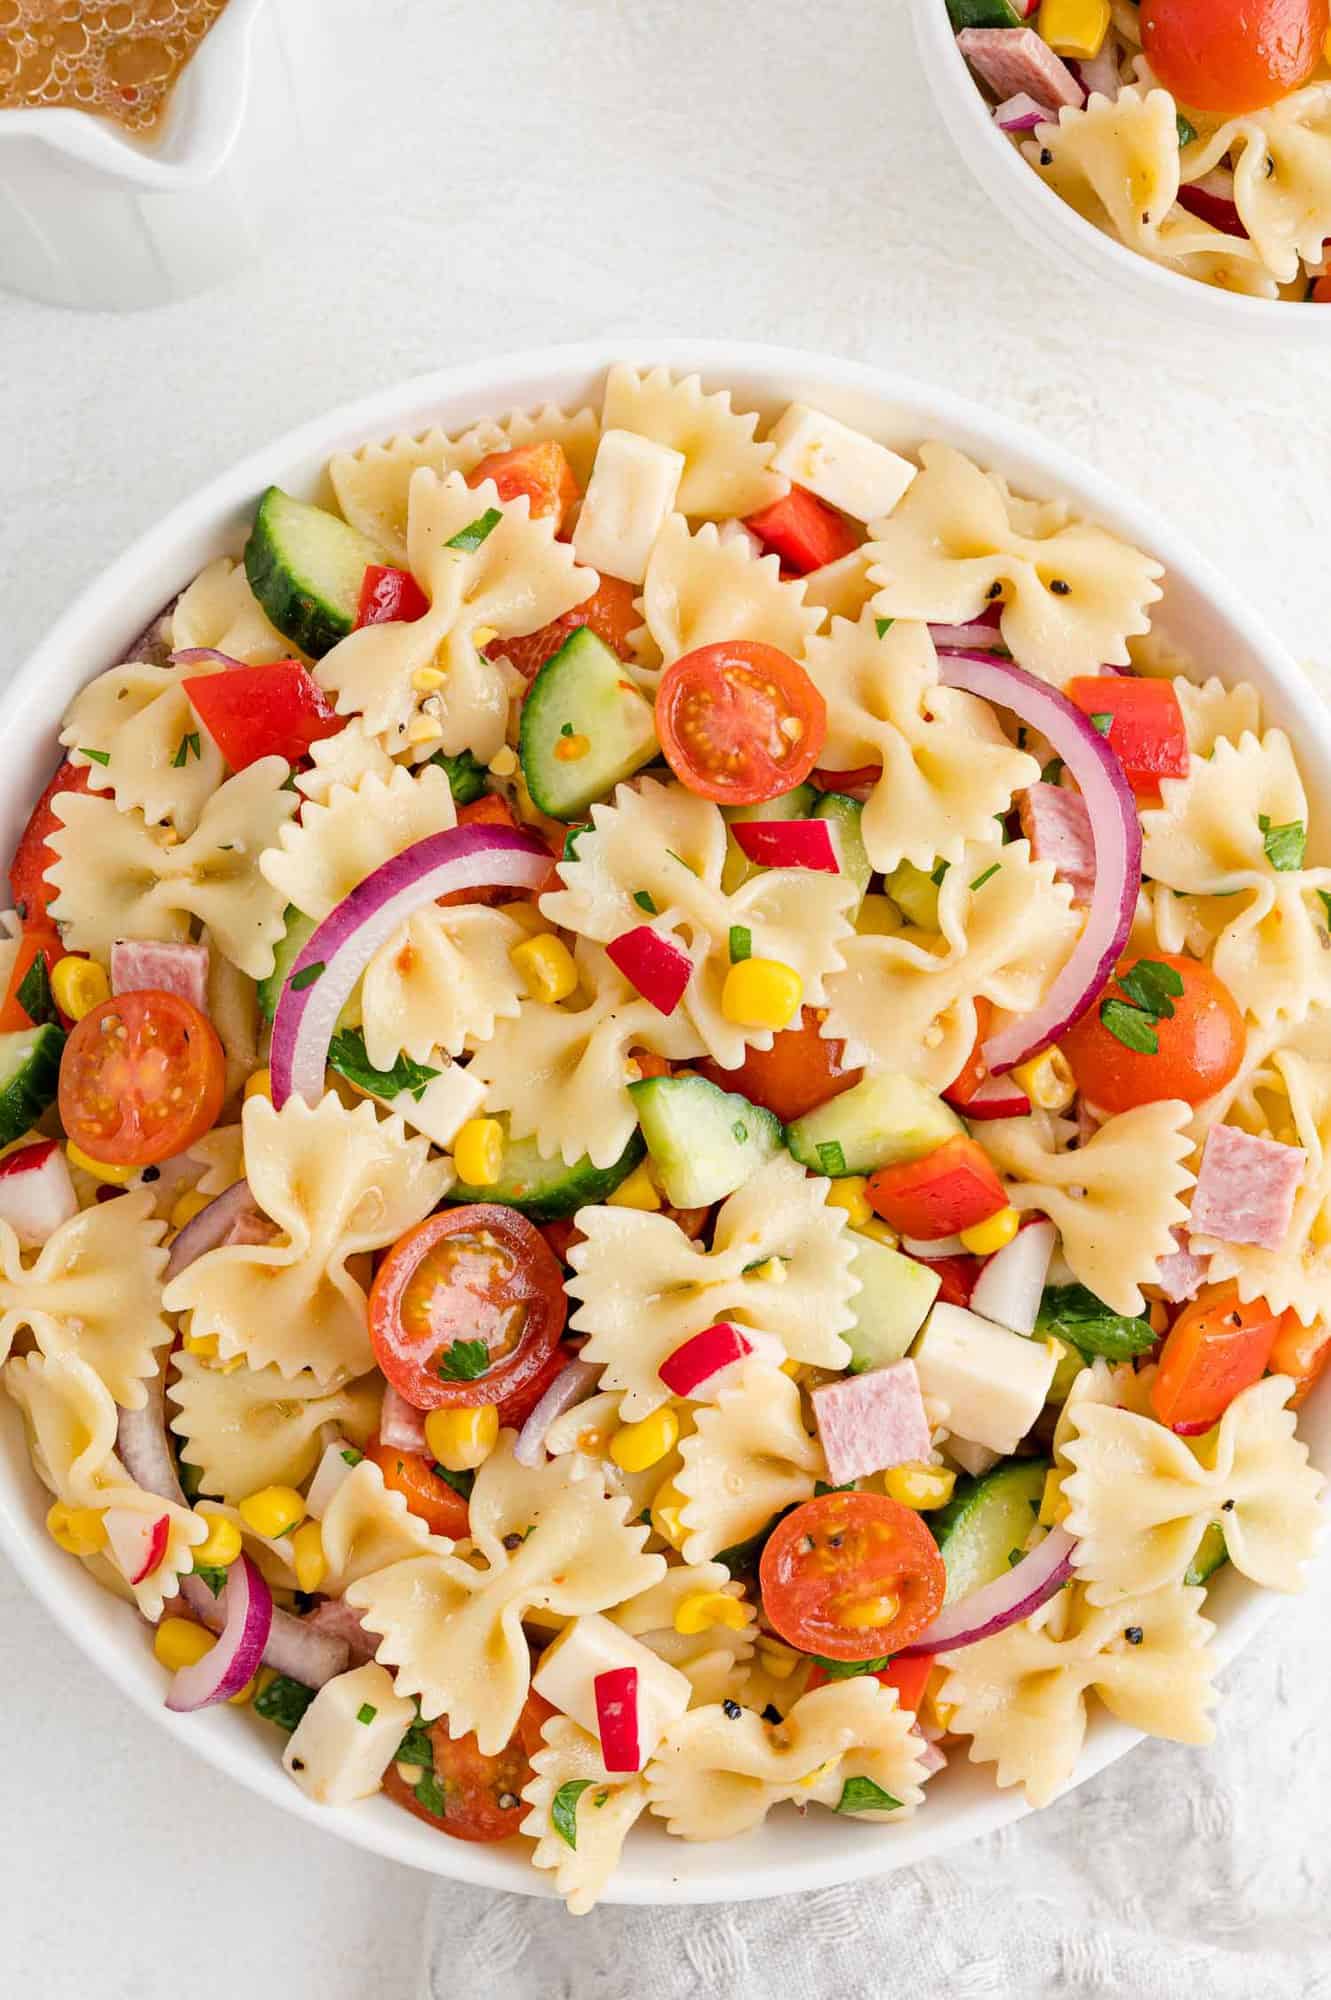 Summer pasta salad with bowtie pasta, in a round white bowl.